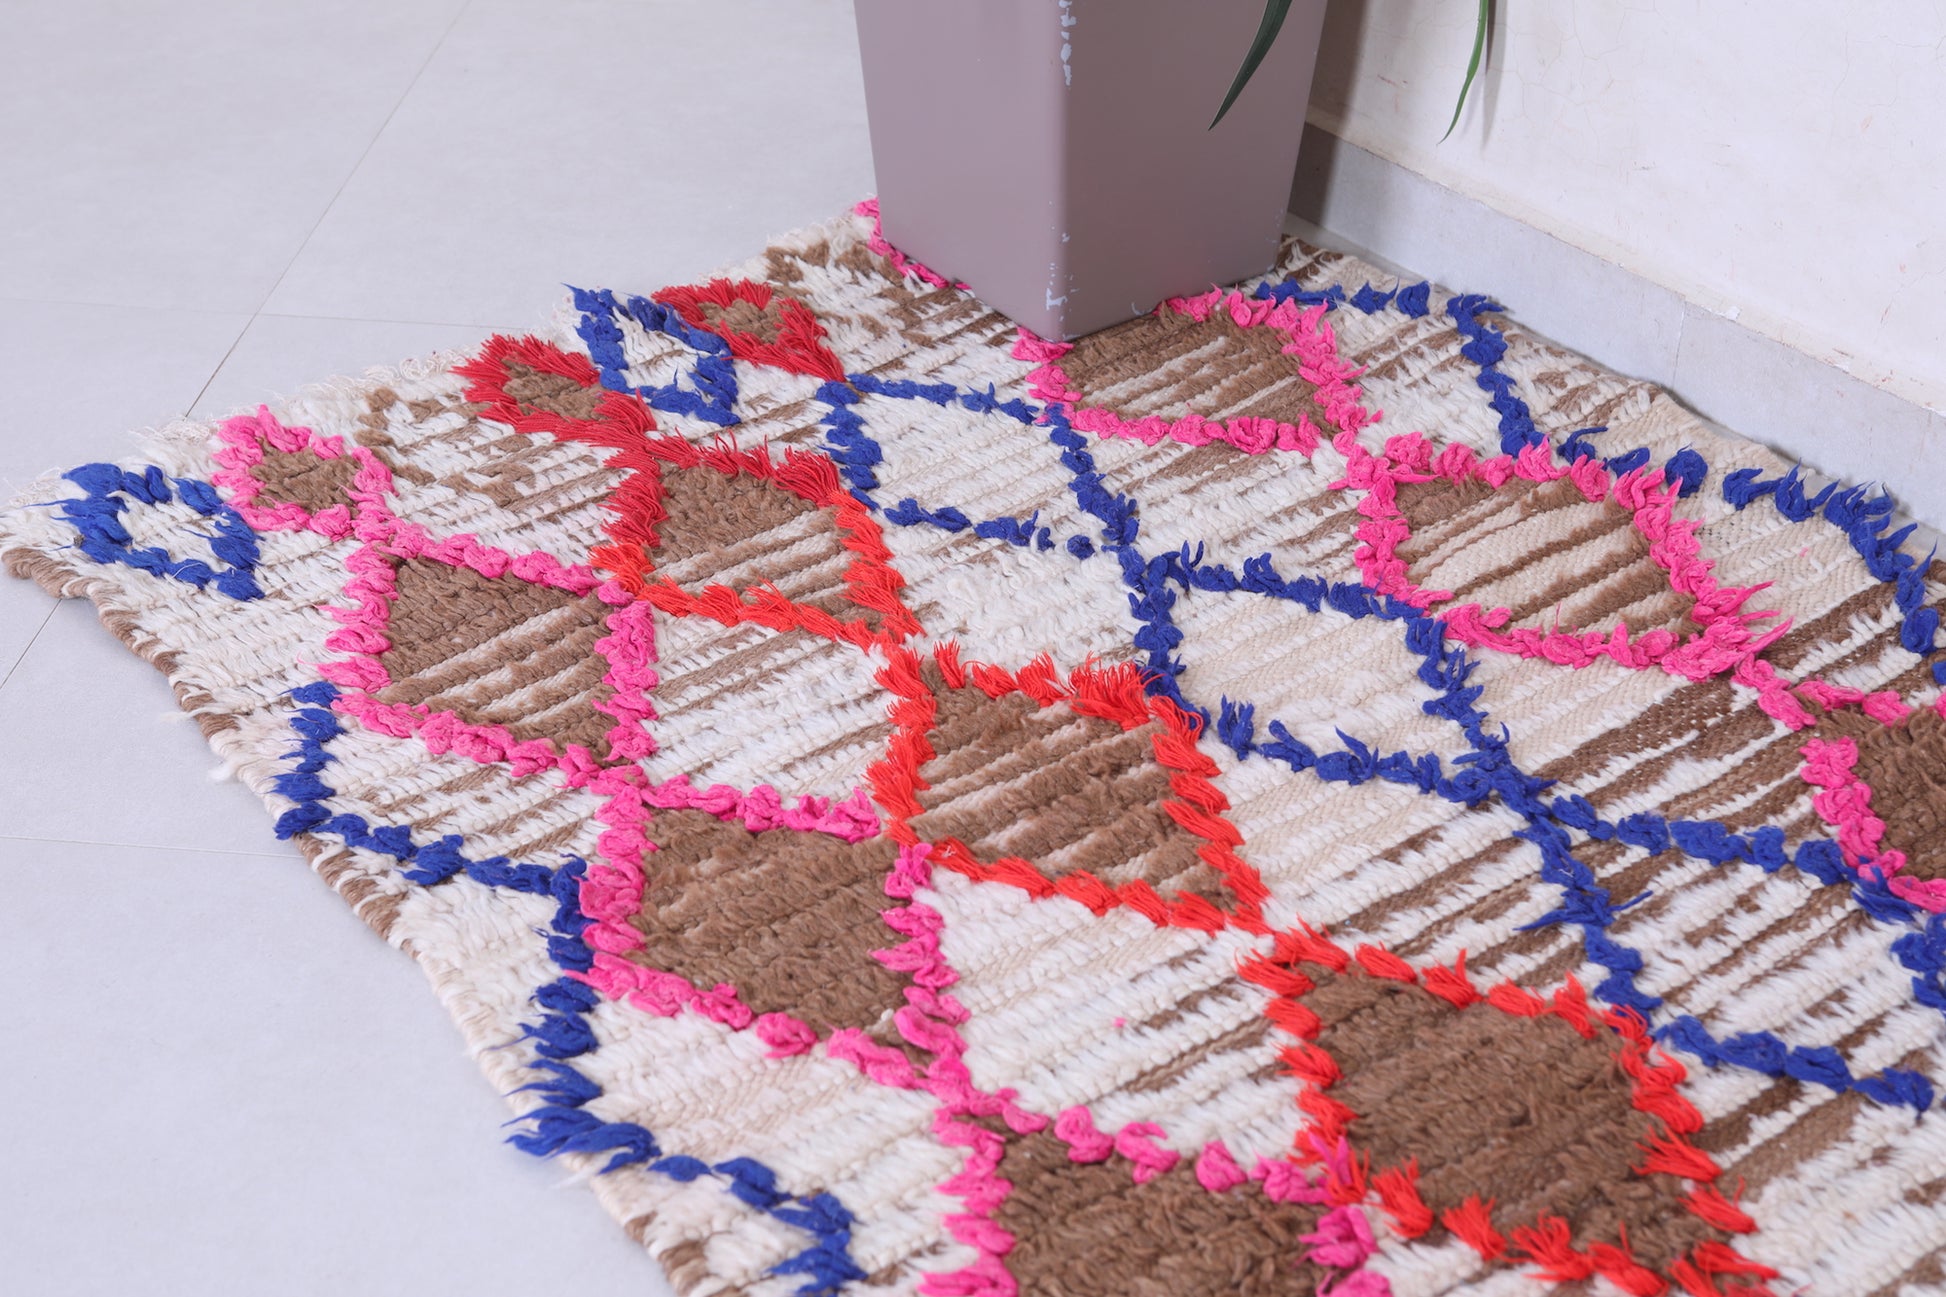 Colorful Moroccan Berber rug 3 X 5.8 Feet